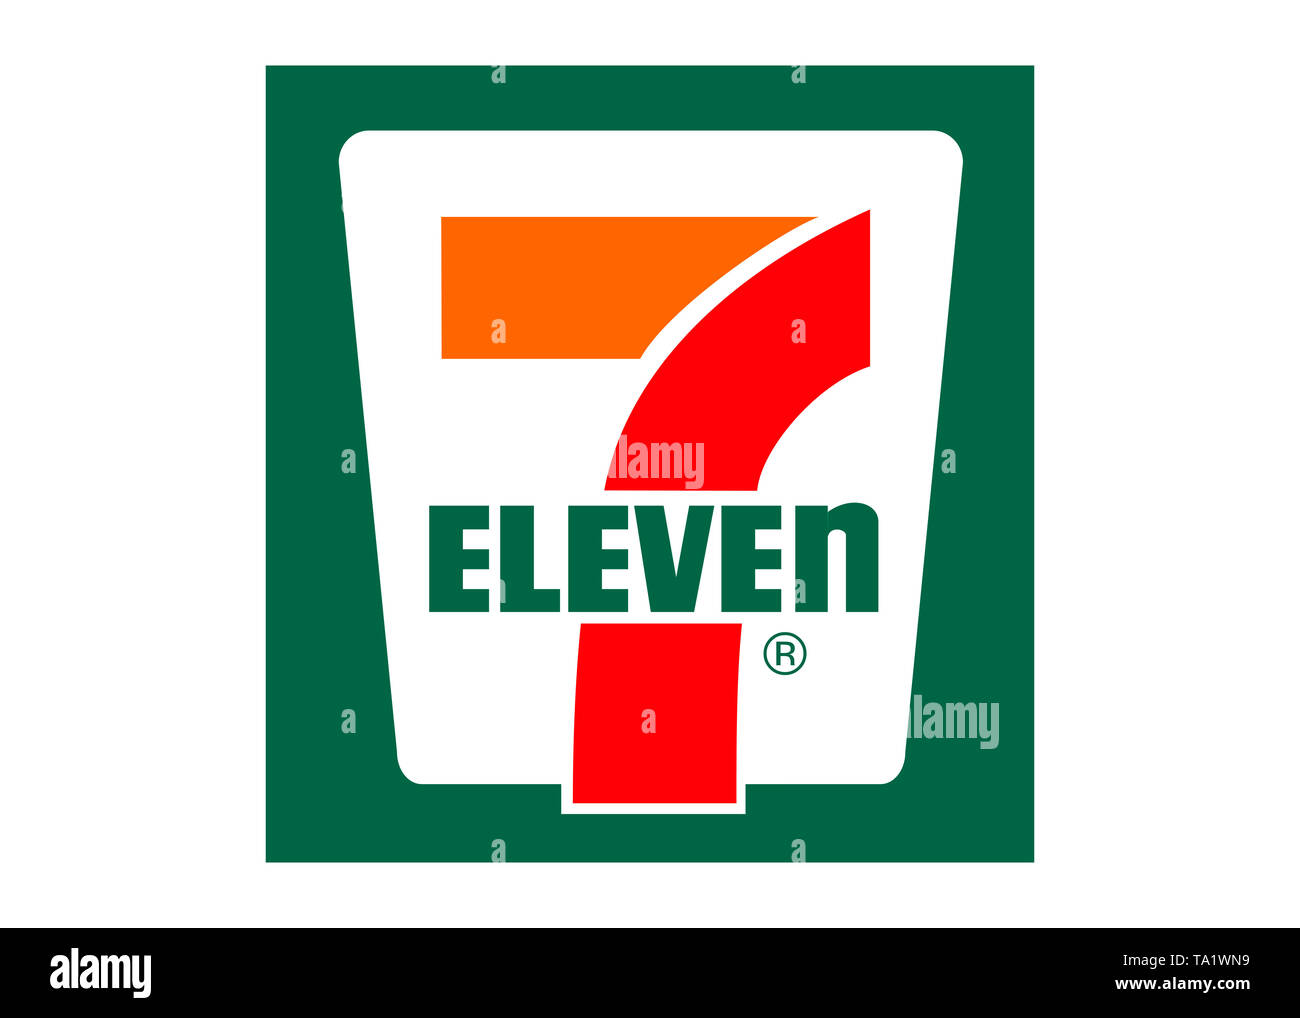 7 eleven logo Stock Photo - Alamy